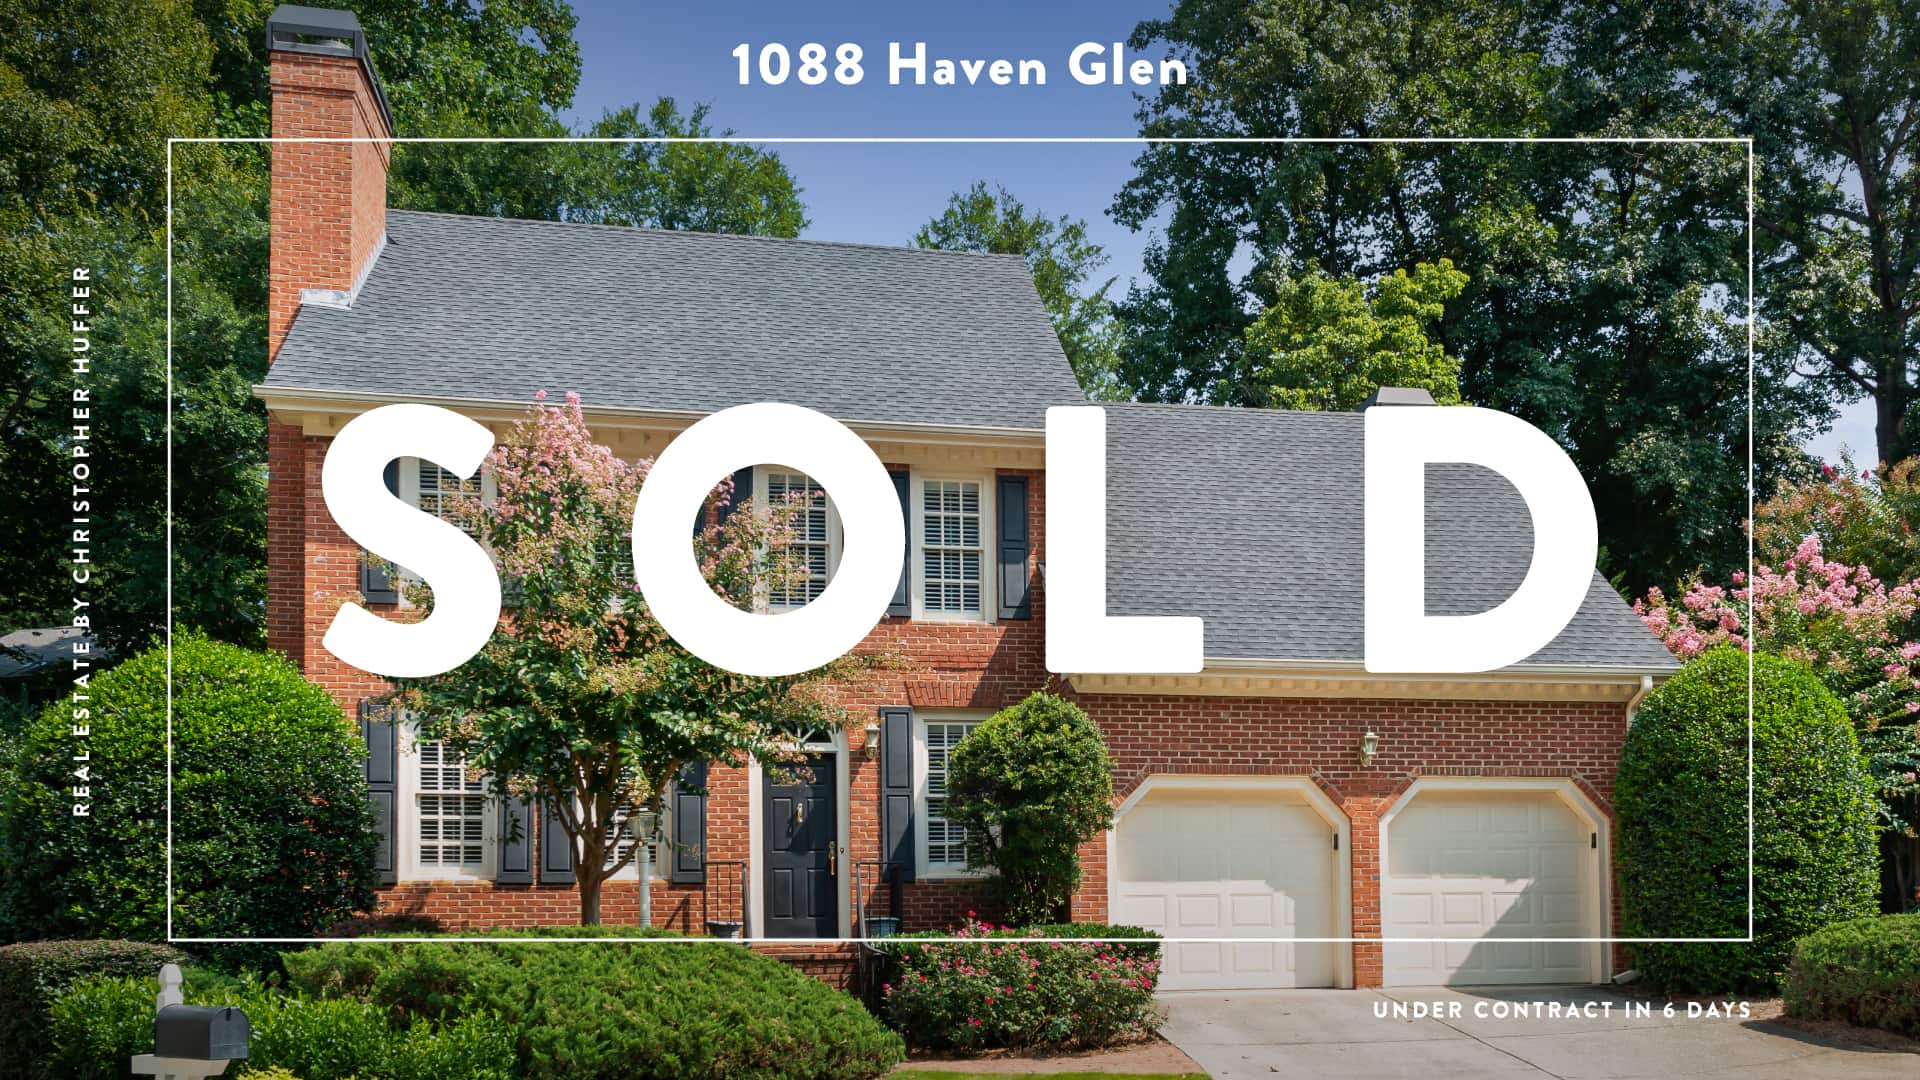 1088 Haven Glen in Brookhaven has sold